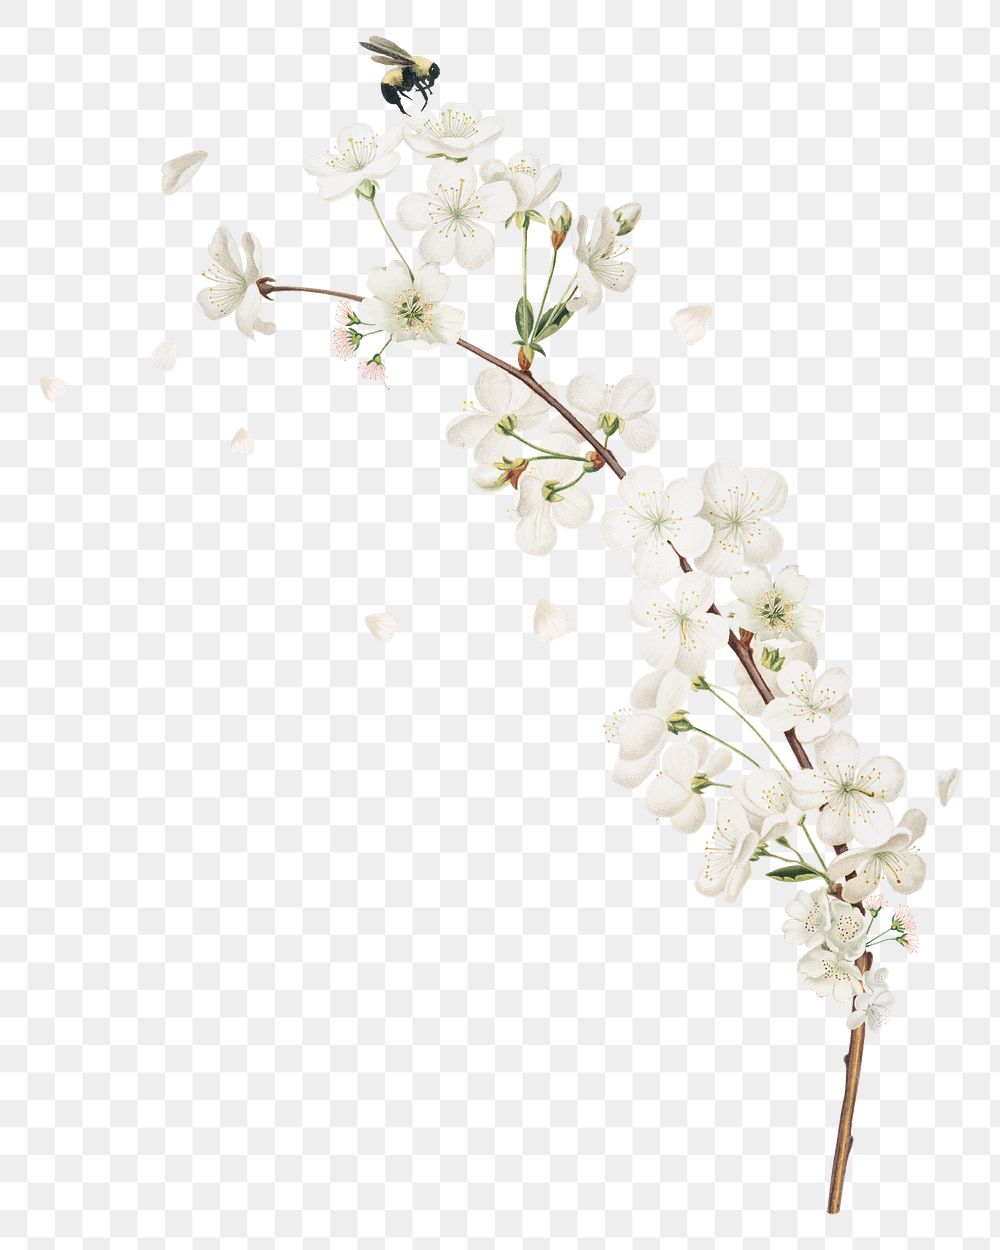 Amarena cherry flower png element, transparent background